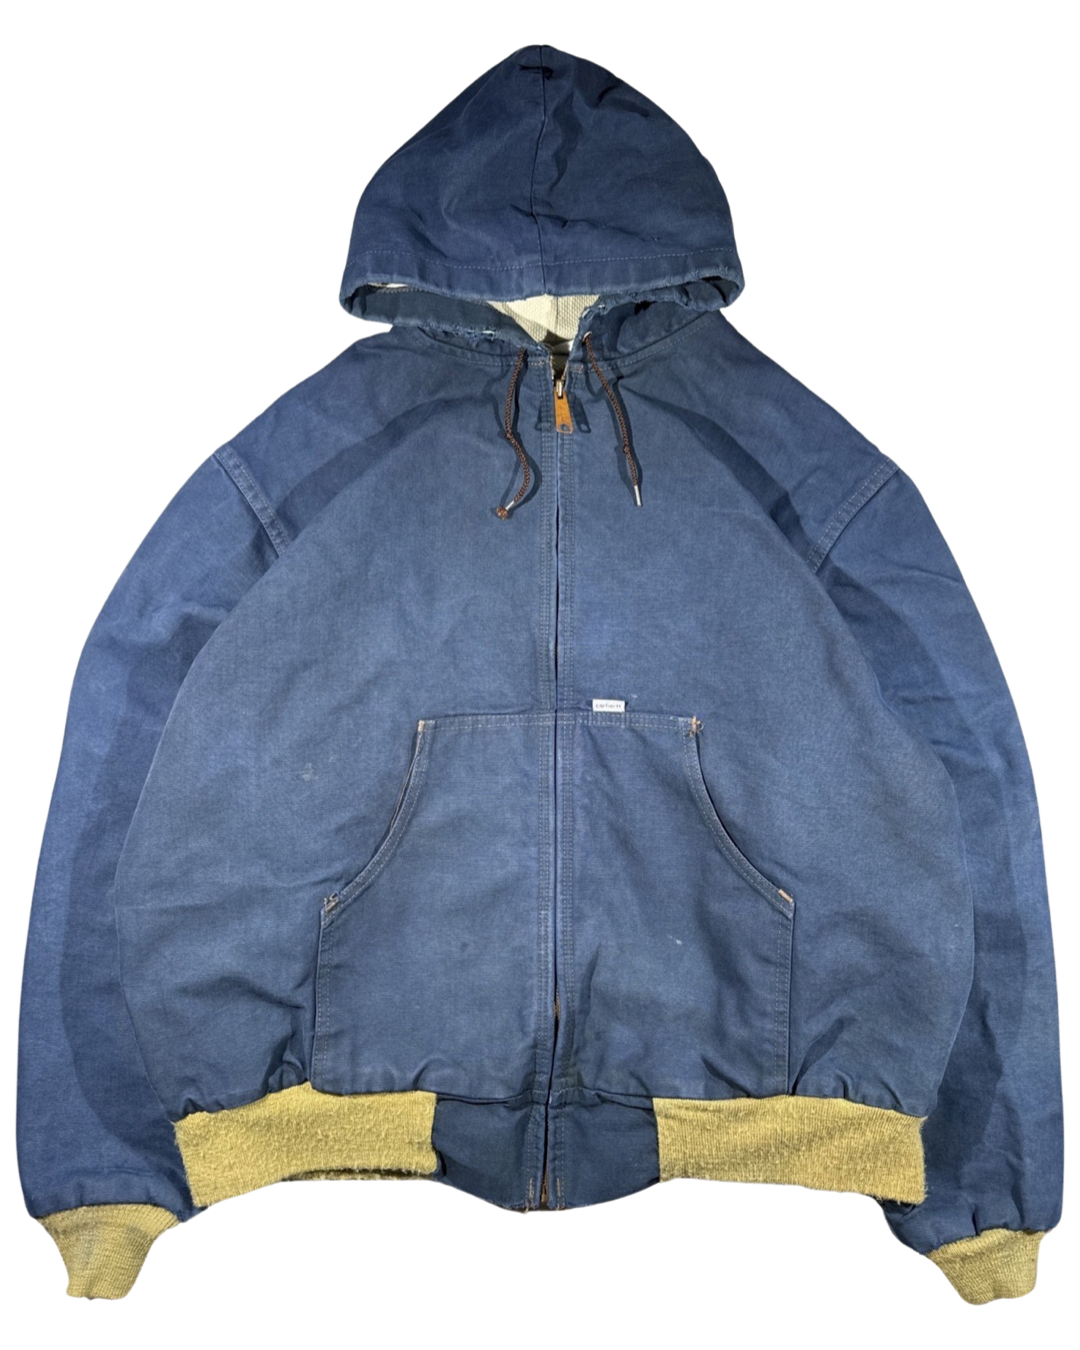 Vintage Carhartt Jacket - L